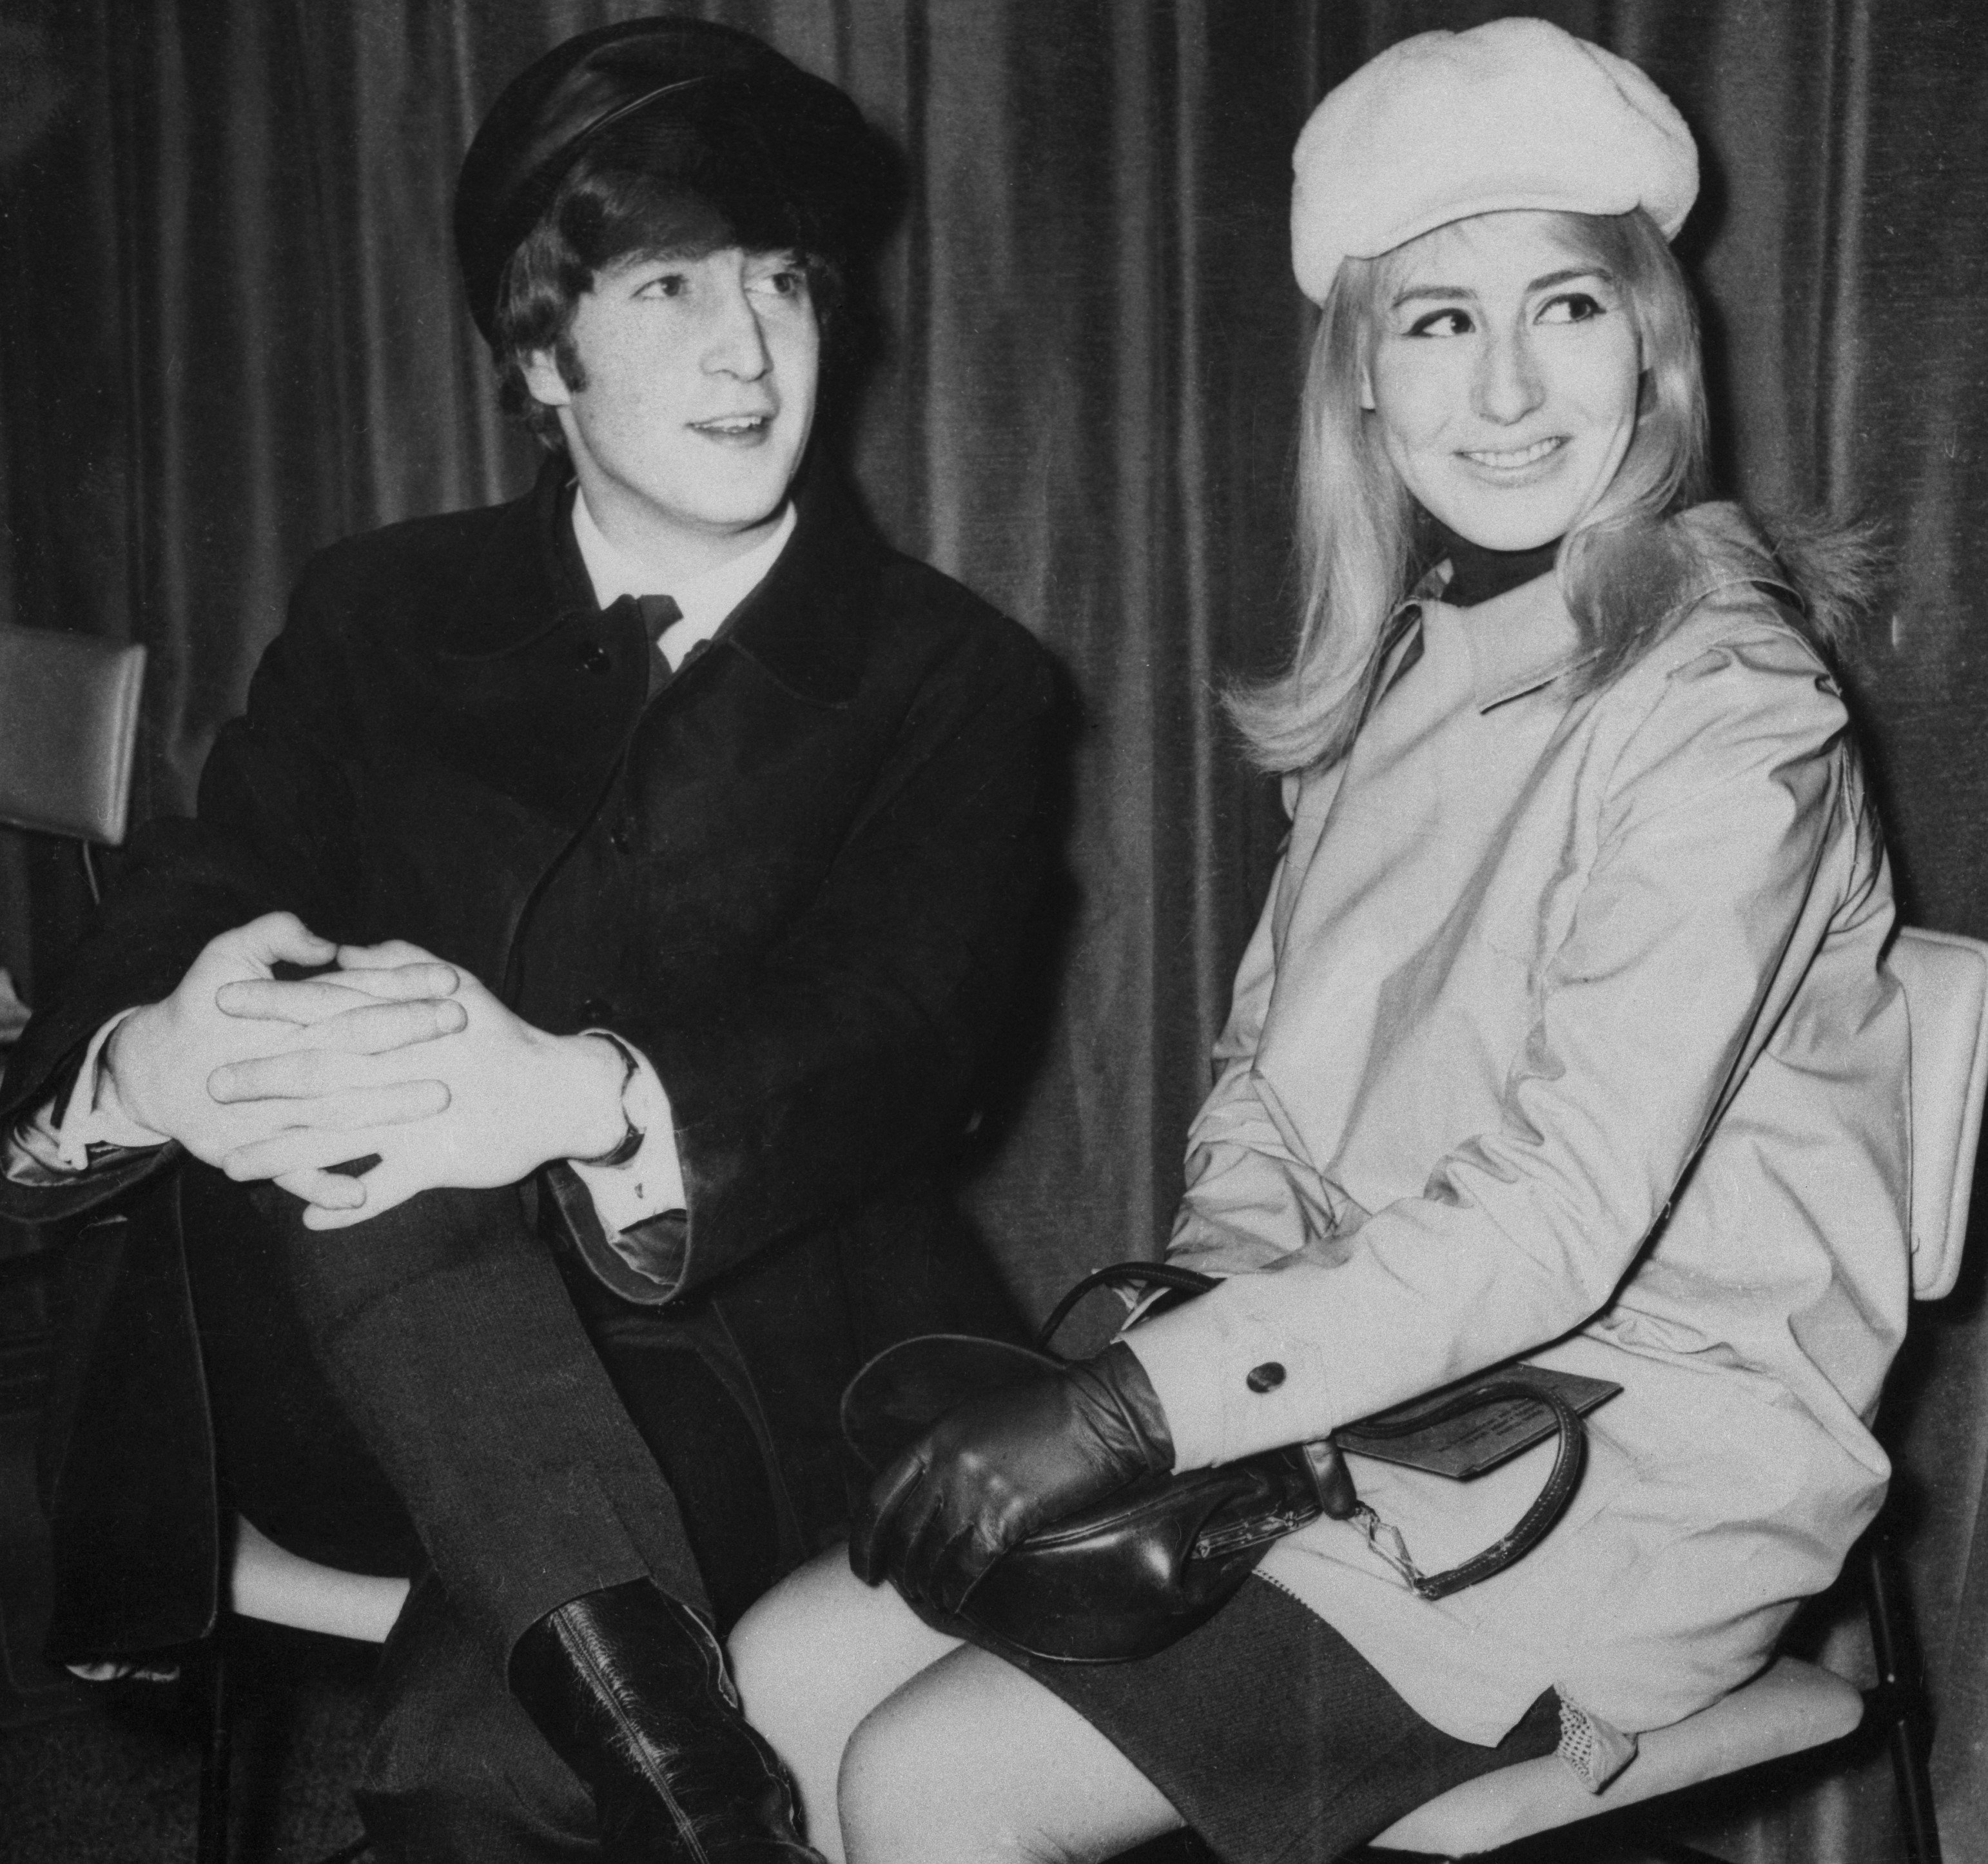 John Lennon and wife Cynthia Lennon sitting on chairs